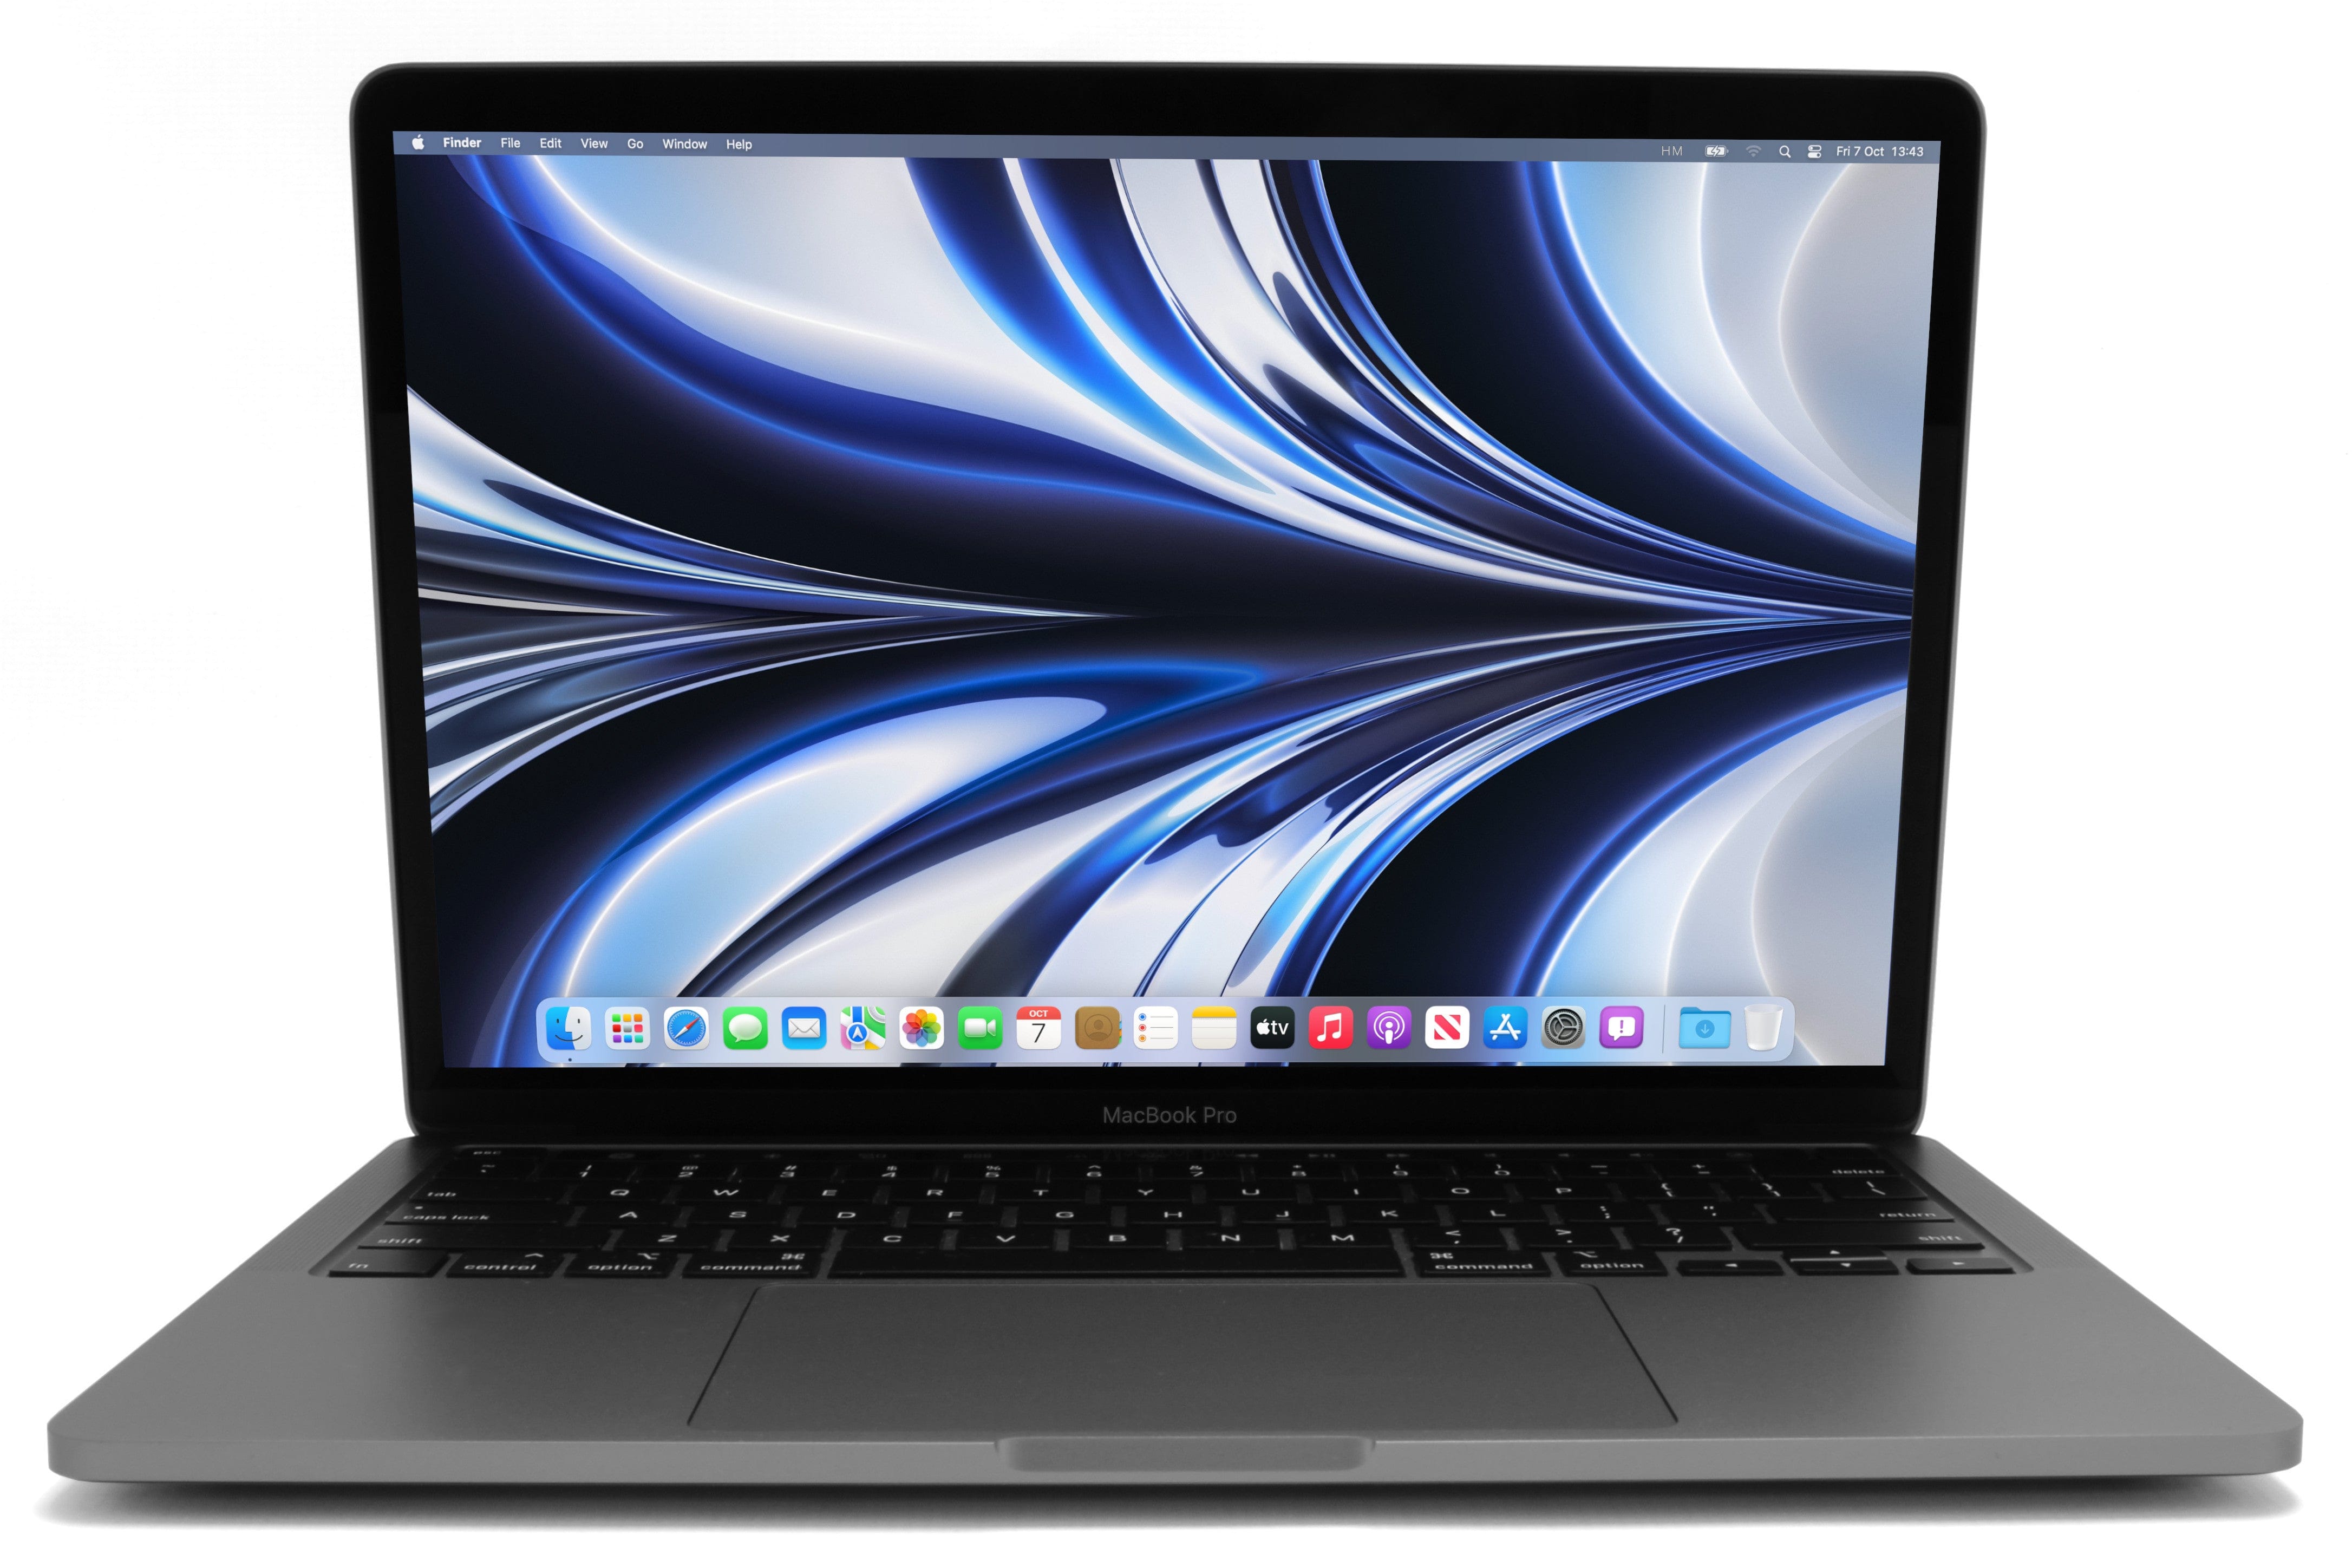 MacBook Pro 13-inch M1 (Space Grey, 2020) - Fair